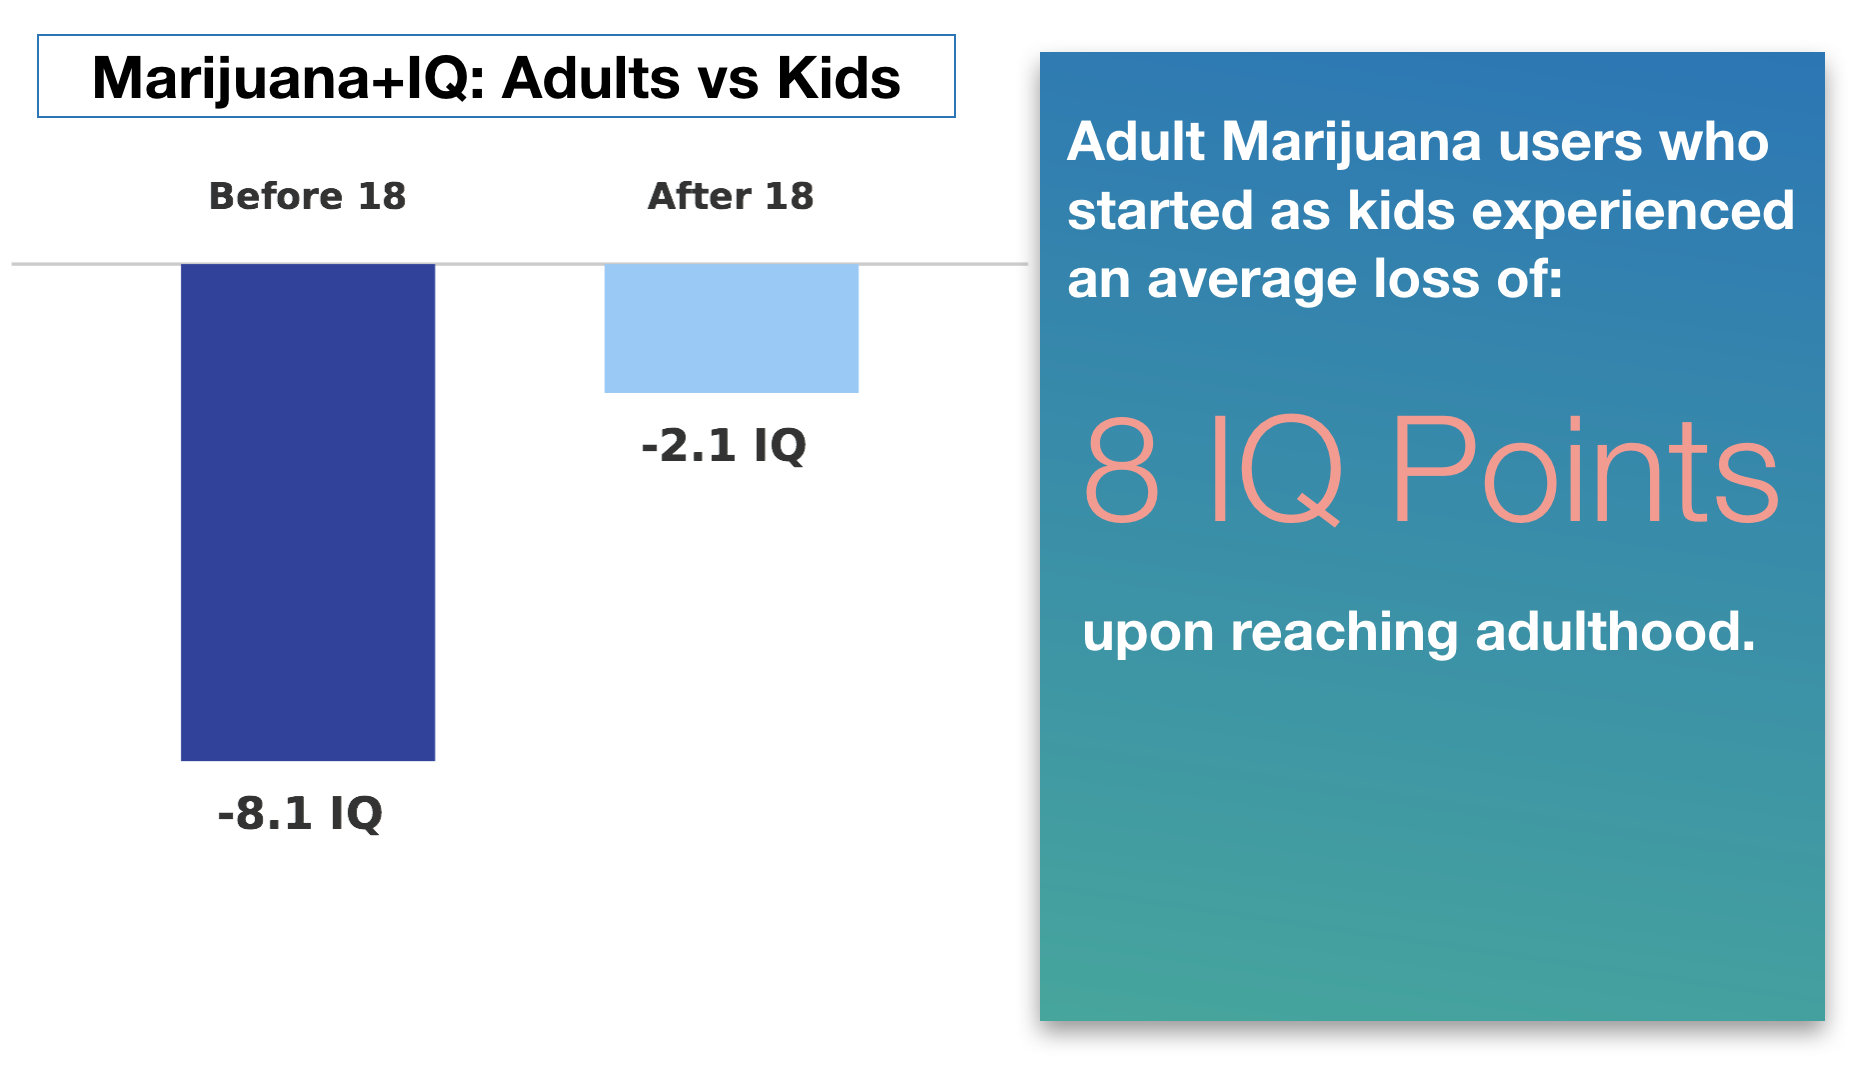 IQ Effects of using marijuana as a child